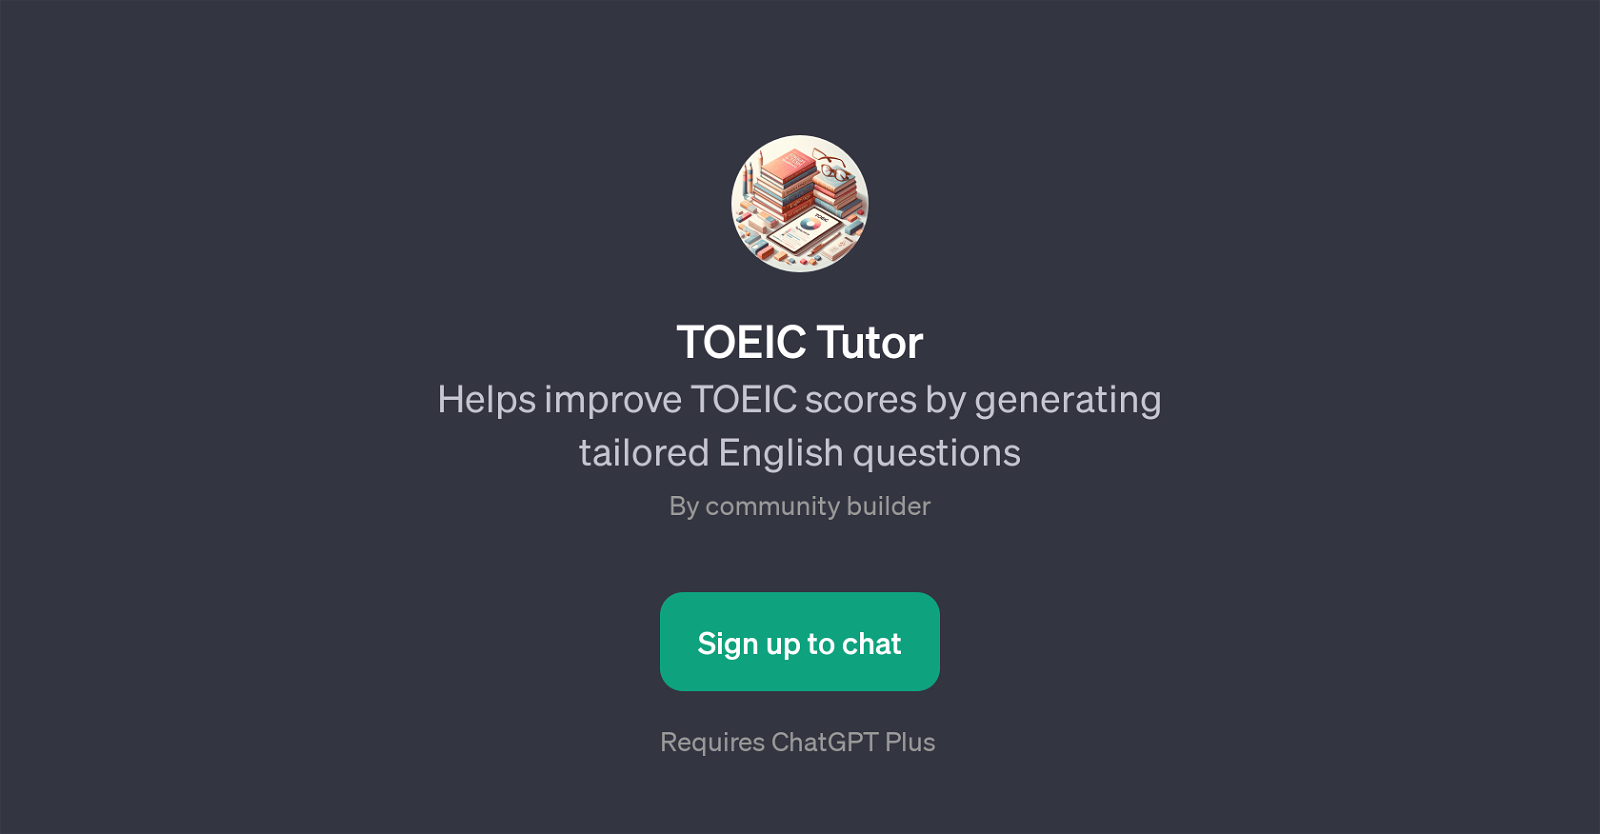 TOEIC Tutor website